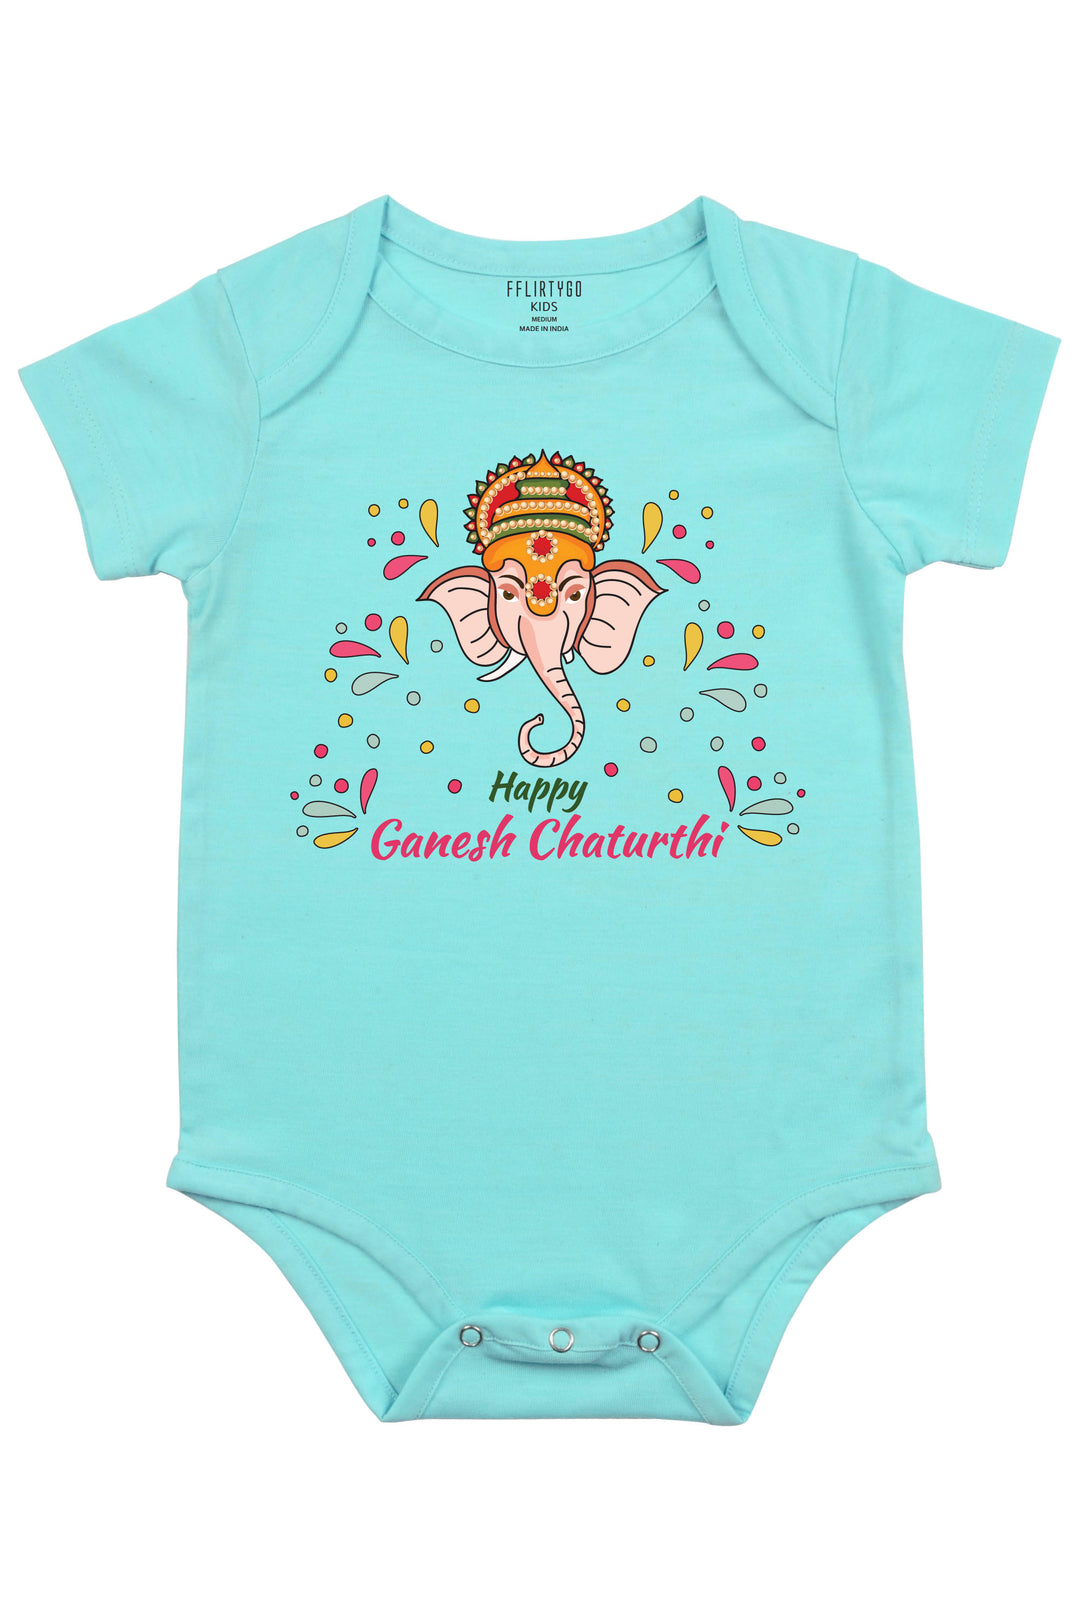 Happy Ganesh Chaturth Baby Romper | Onesies